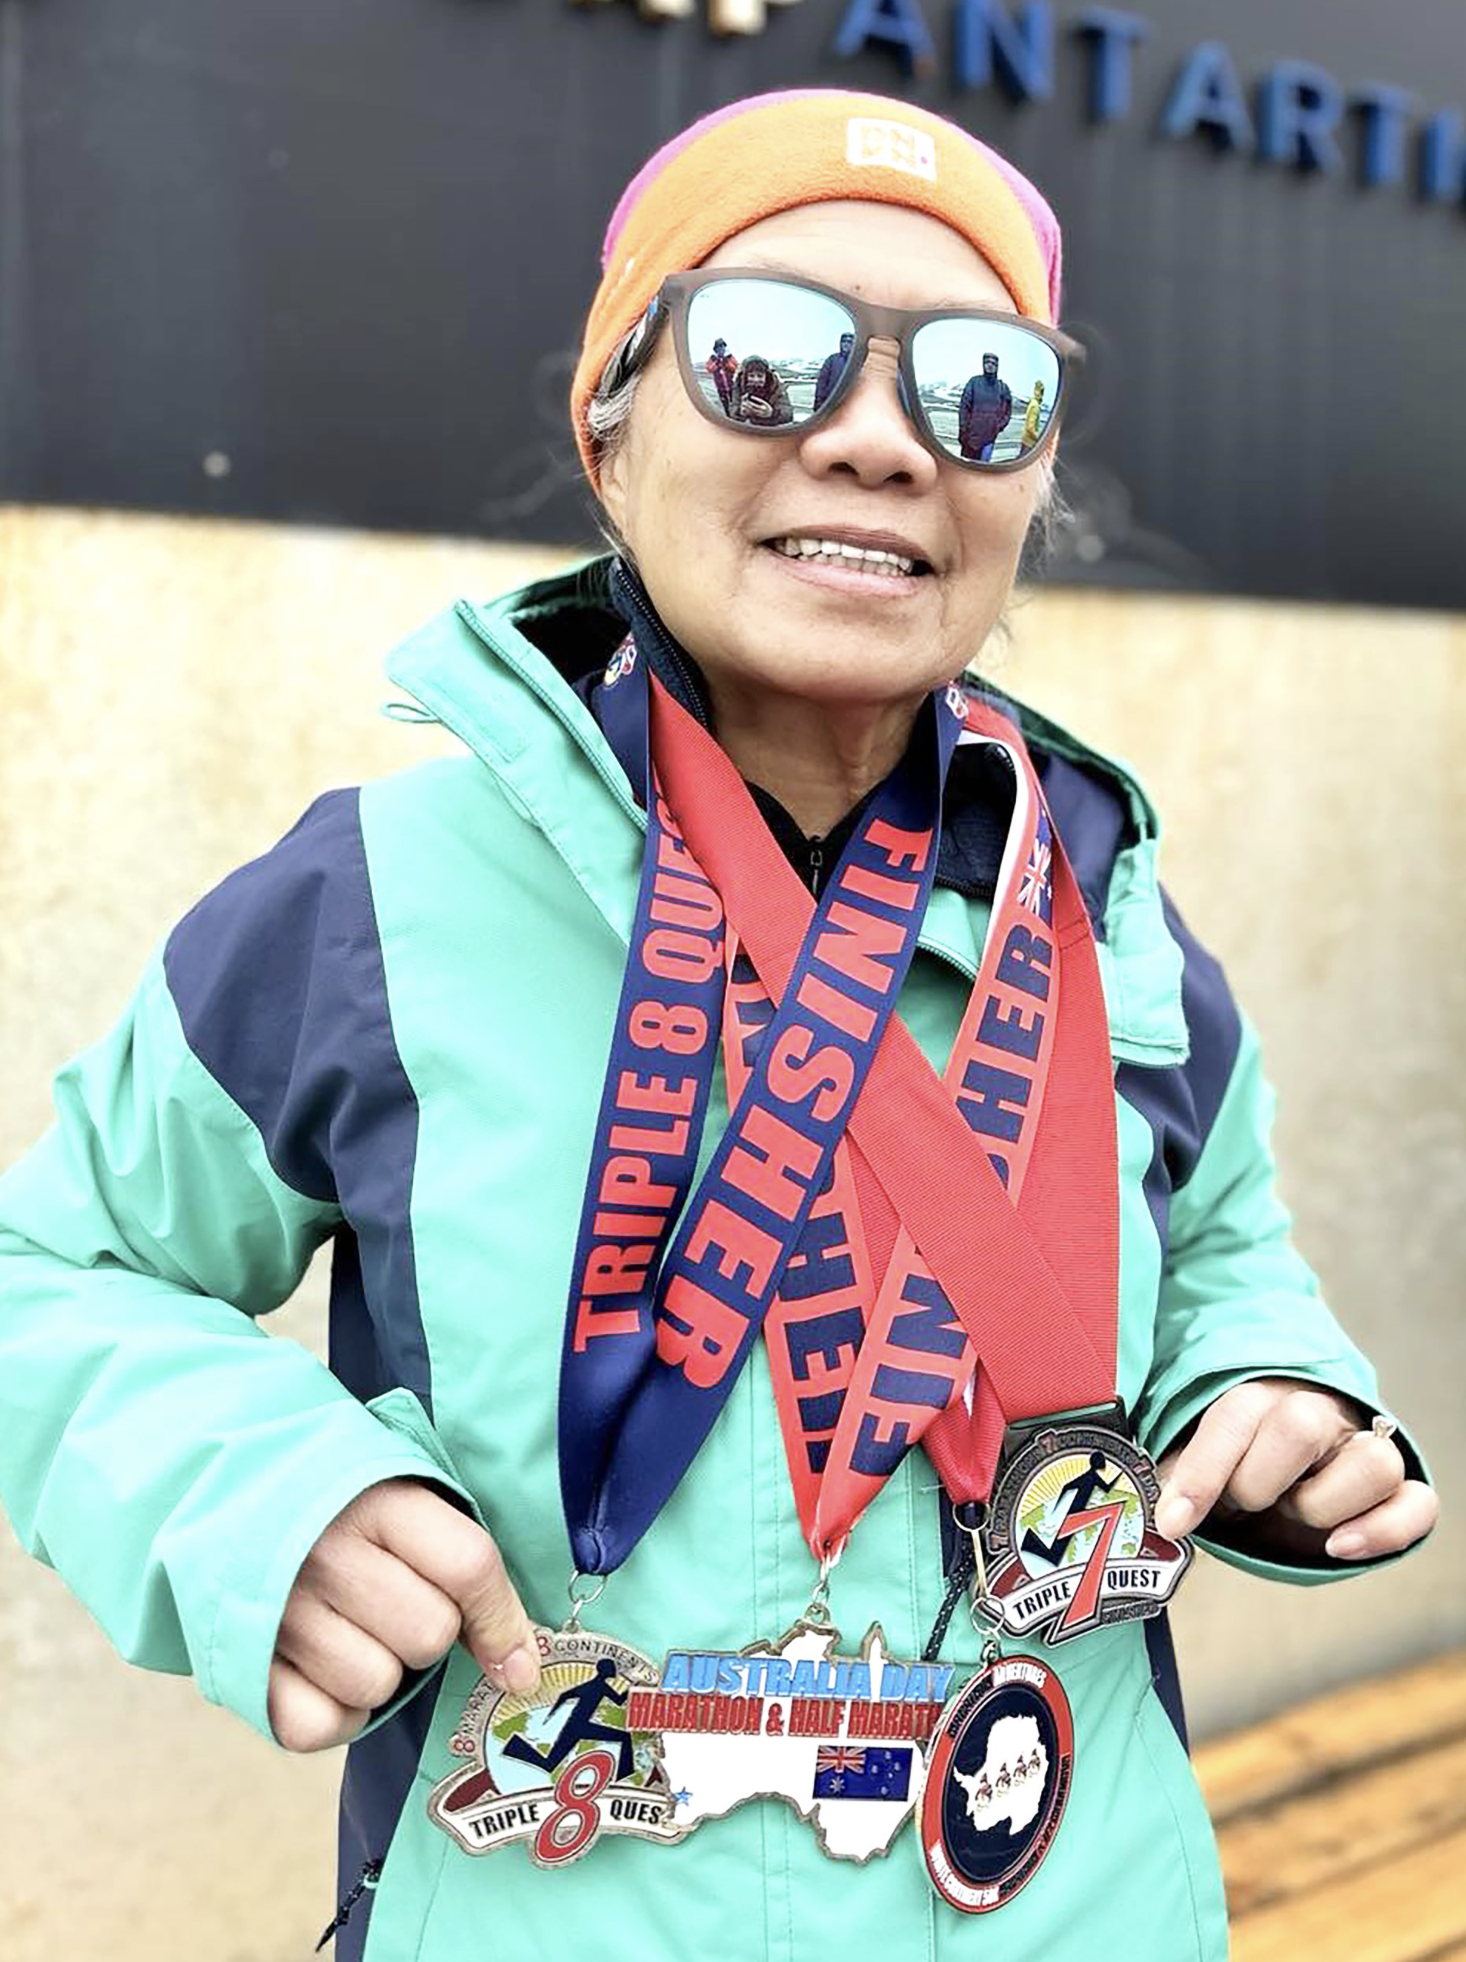 Vietnamese-born American septuagenarian runs over 130 marathons worldwide